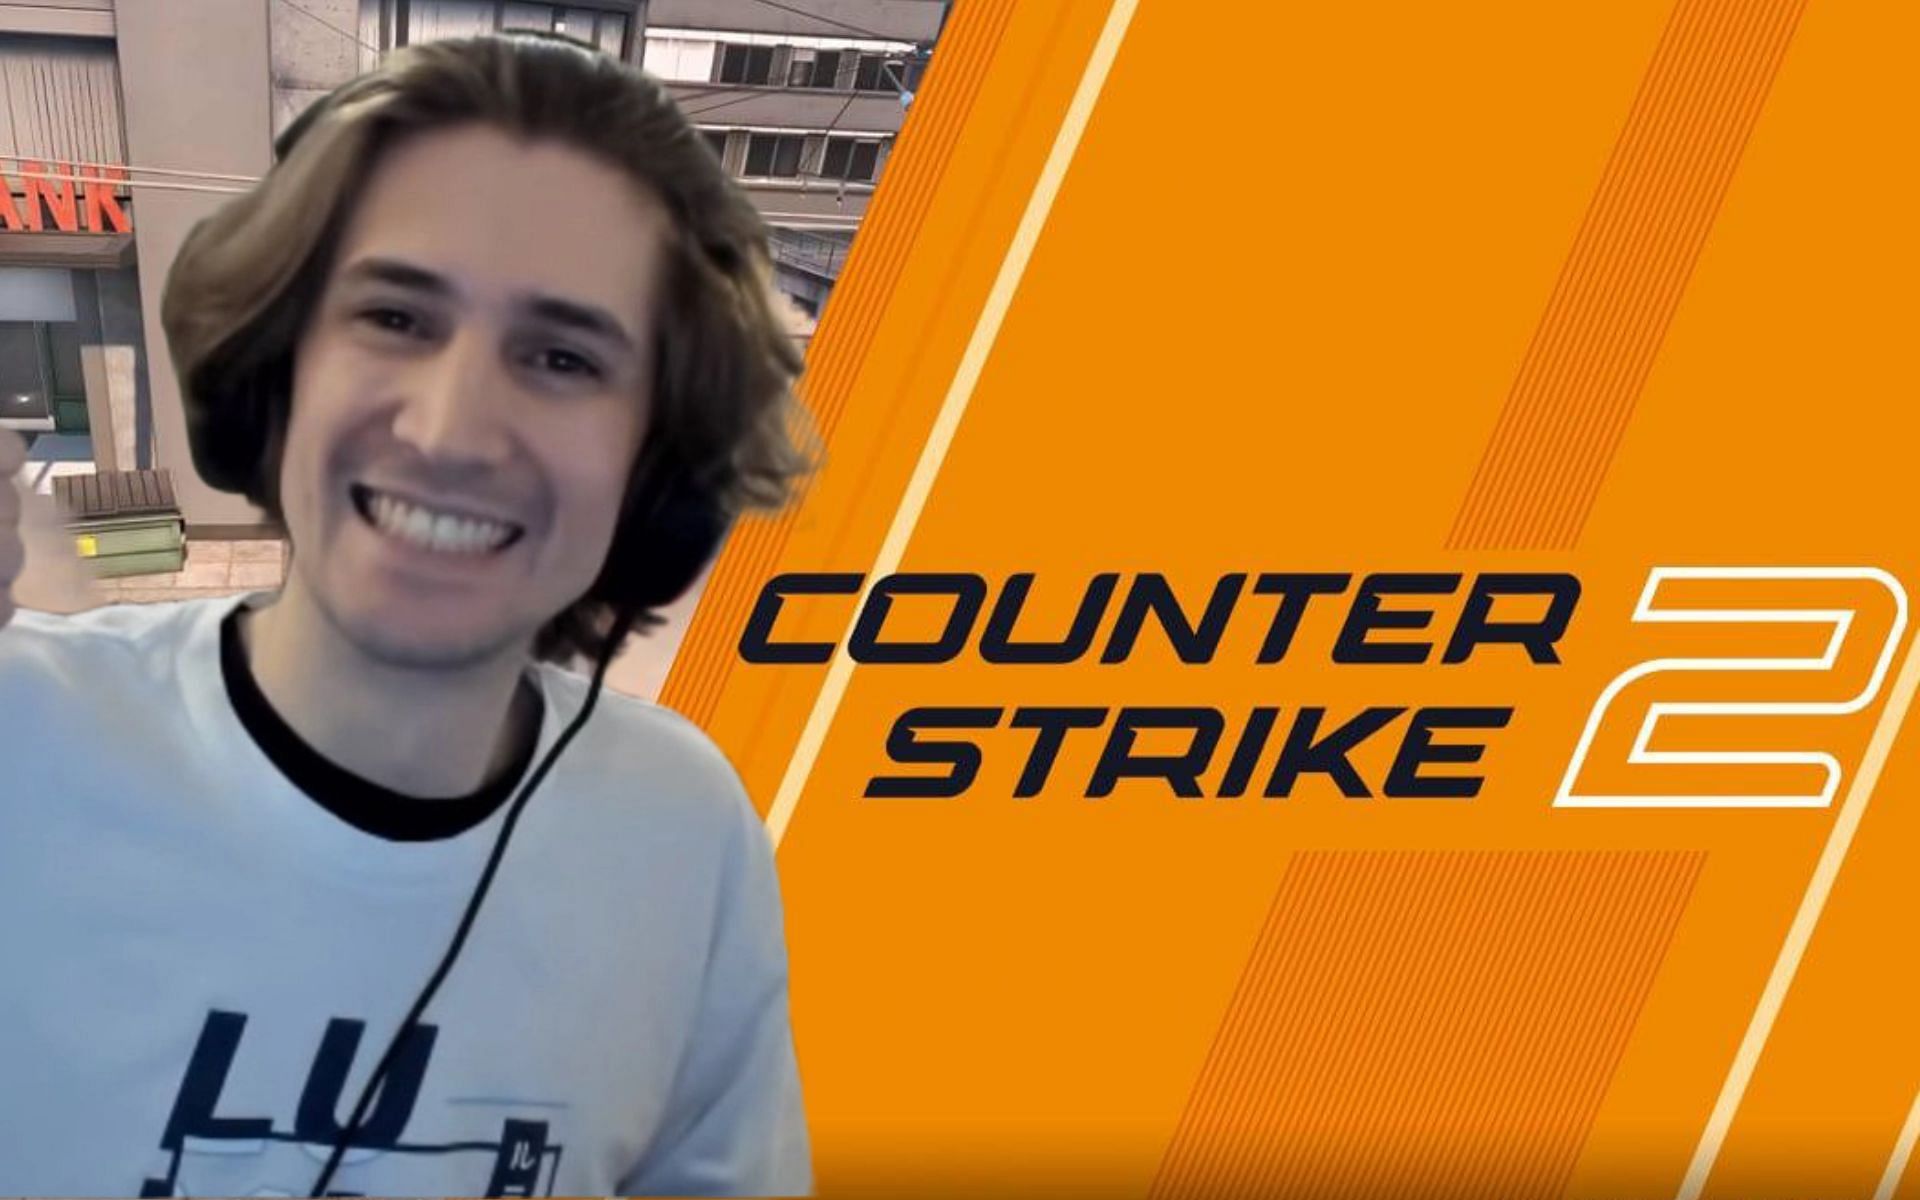 xQc revela que fue invitado a jugar Counter-Strike 2, muestra mensajes directos de Twitter